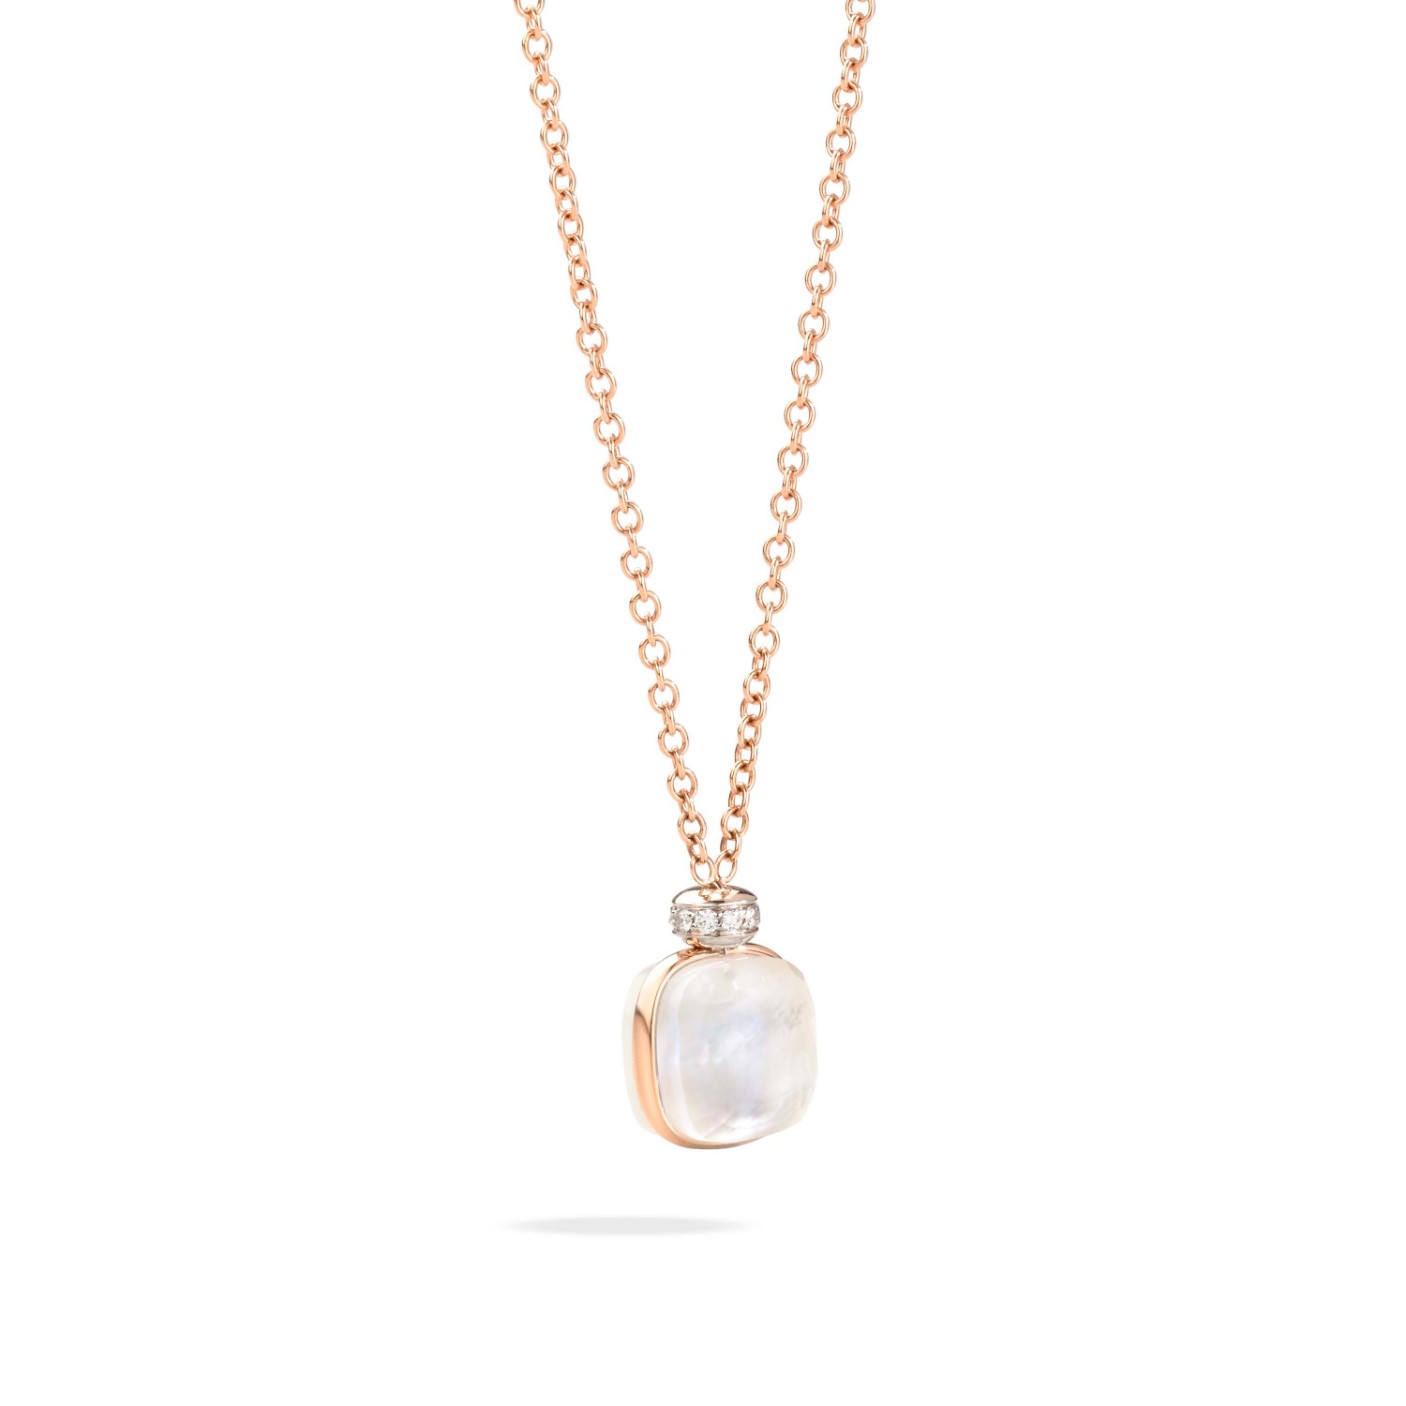 PCC2022_O6WHR_BTBMP_010_Pomellato_necklace-nudo-white-gold-18kt-rose-gold-18kt-white-topaz-mother-of-pearl-diamond.jpg